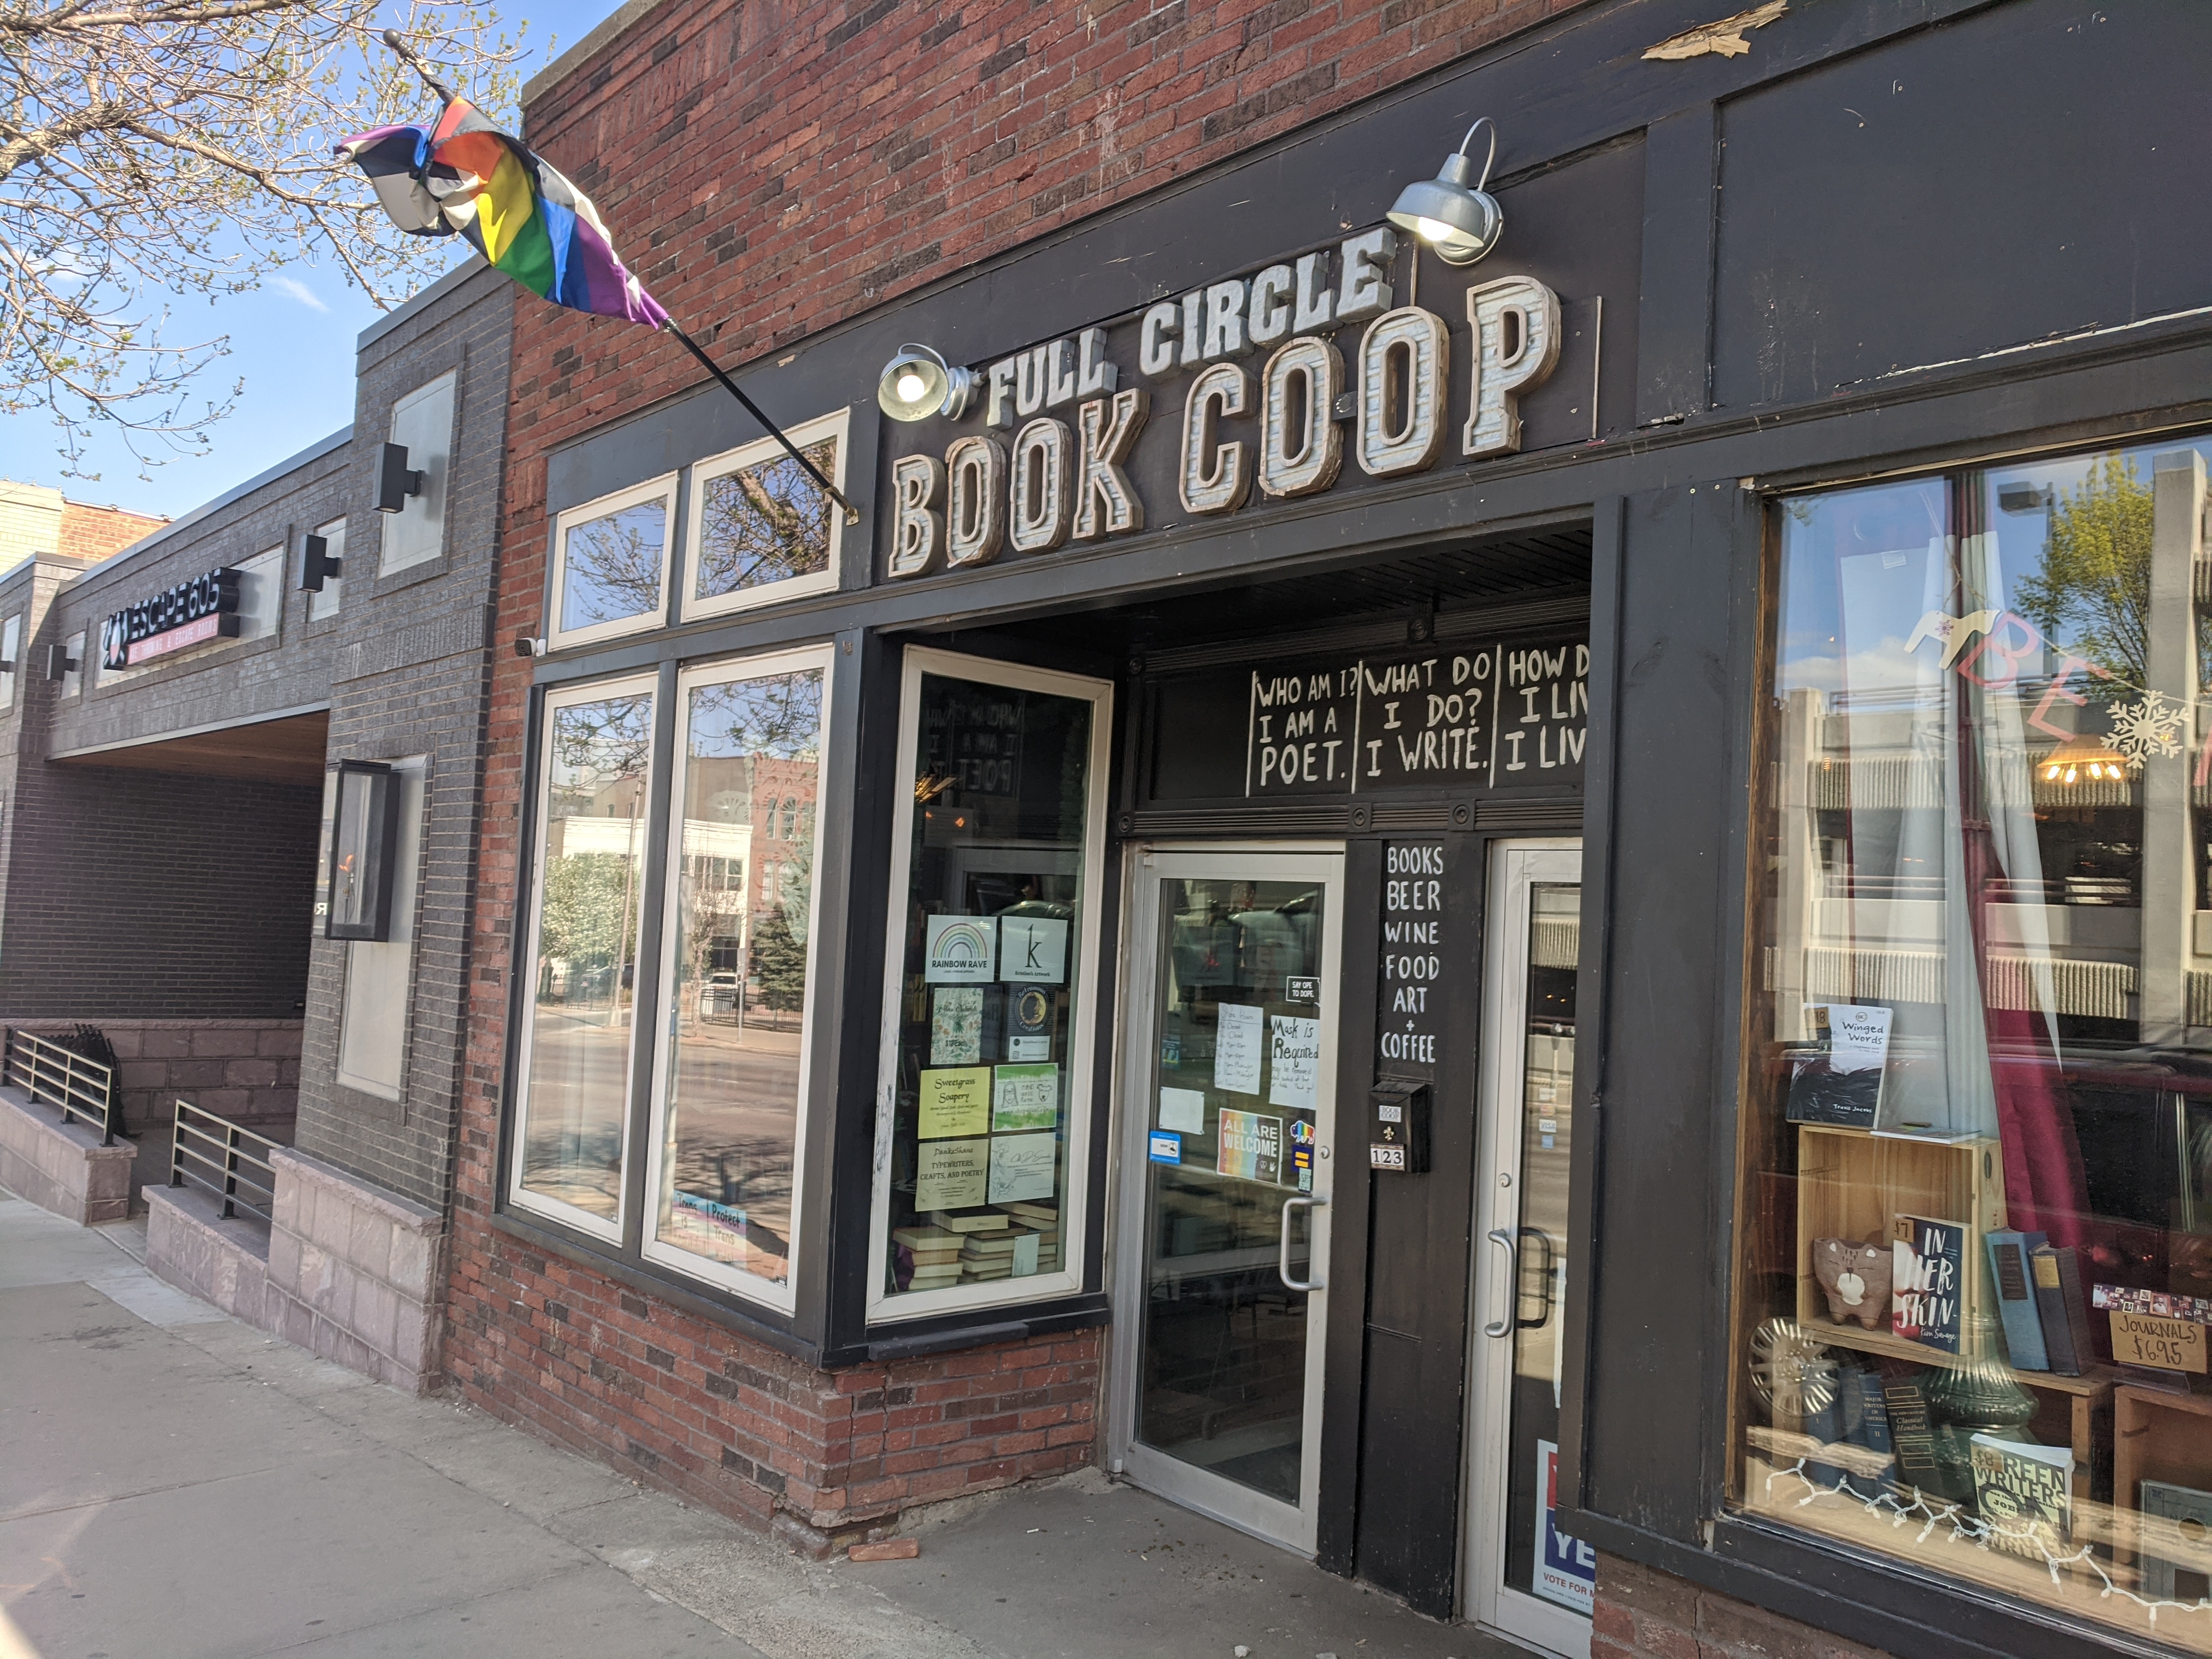 REACH Literacy running pop-up bookstore in downtown Sioux Falls